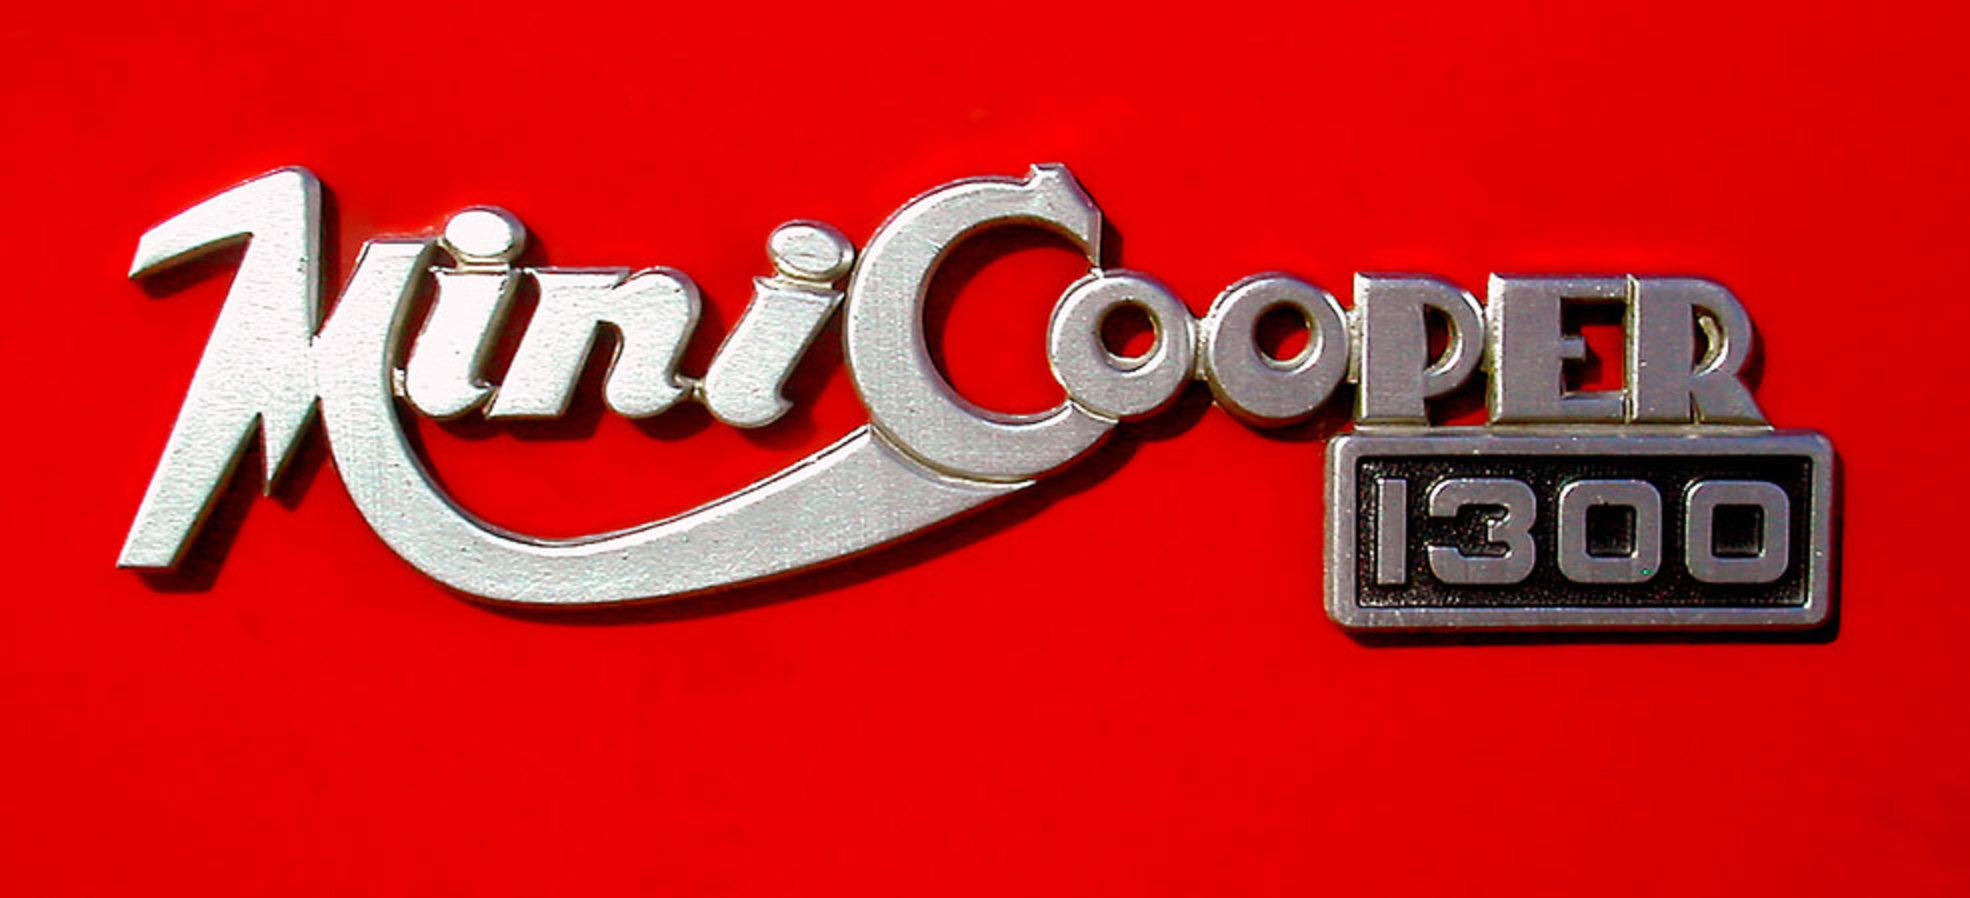 Mini Mini Cooper 1300